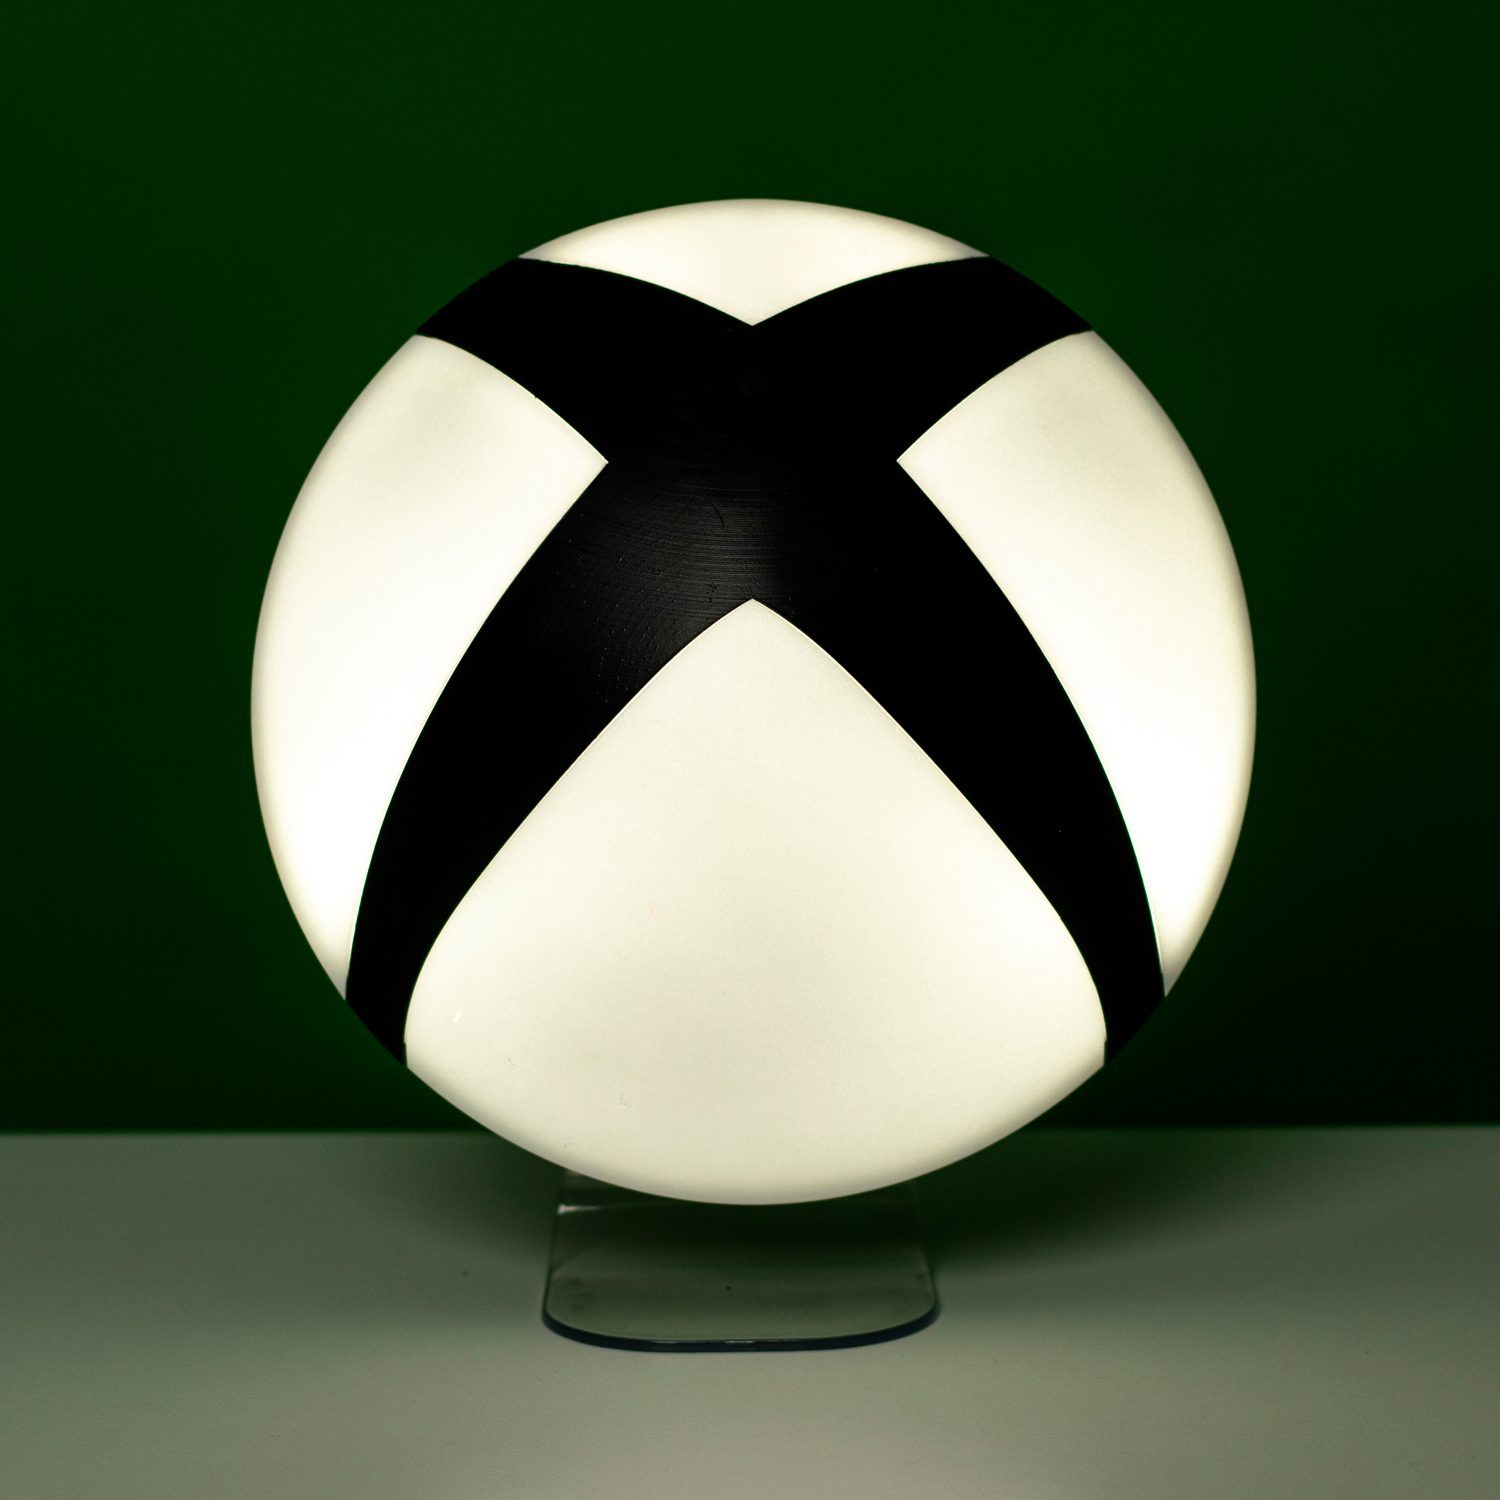 Xbox Logo Lamp